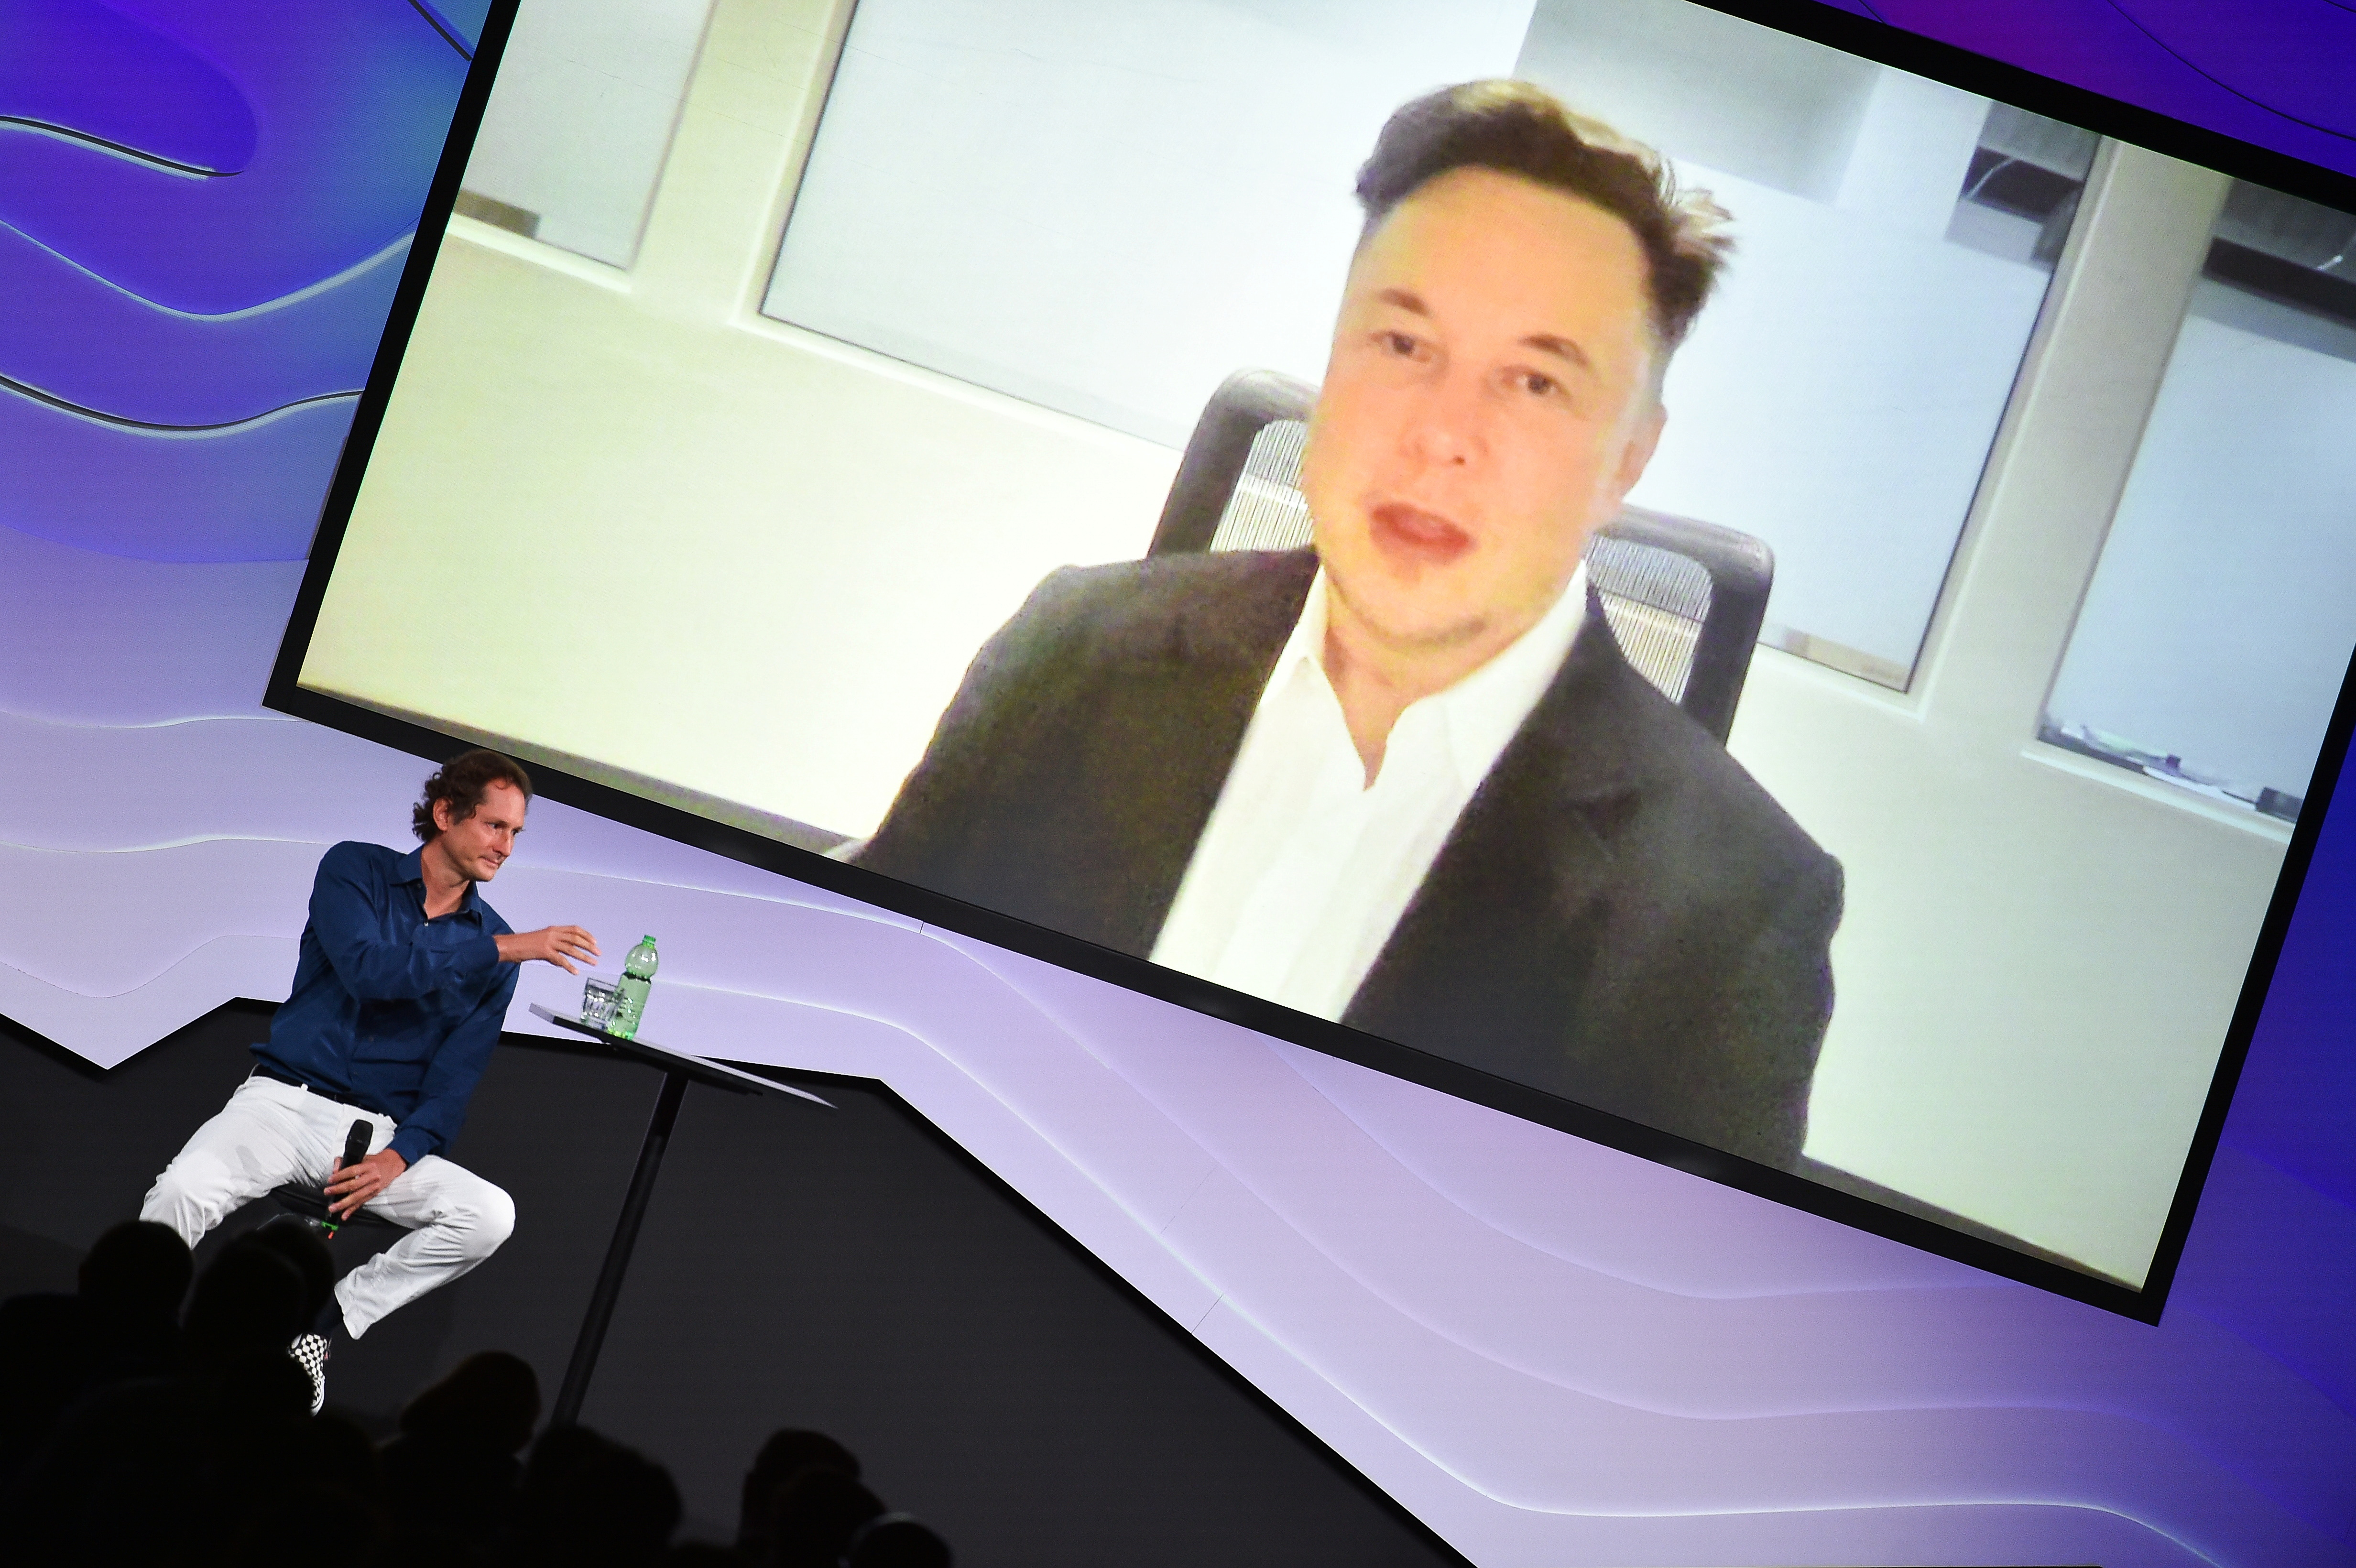 Chairman of Stellantis and Ferrari John Elkann speaks via video conference with Tesla's founder Elon Musk in Turin